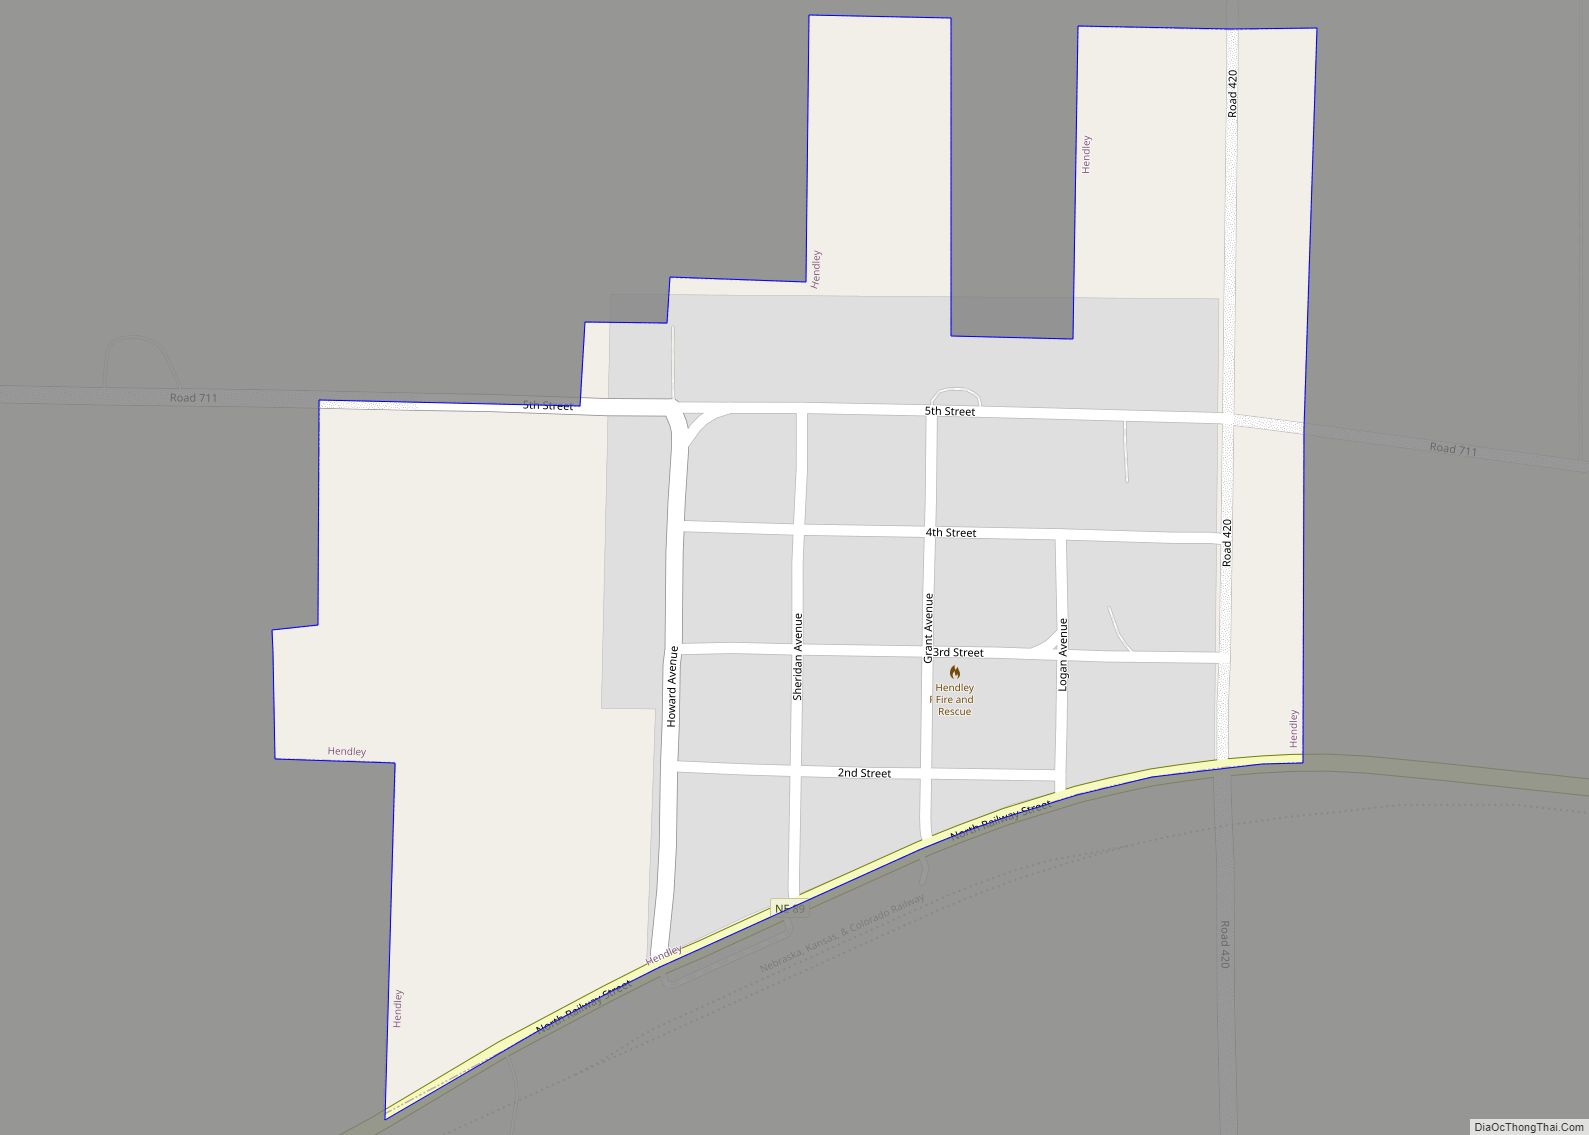 Map of Hendley village